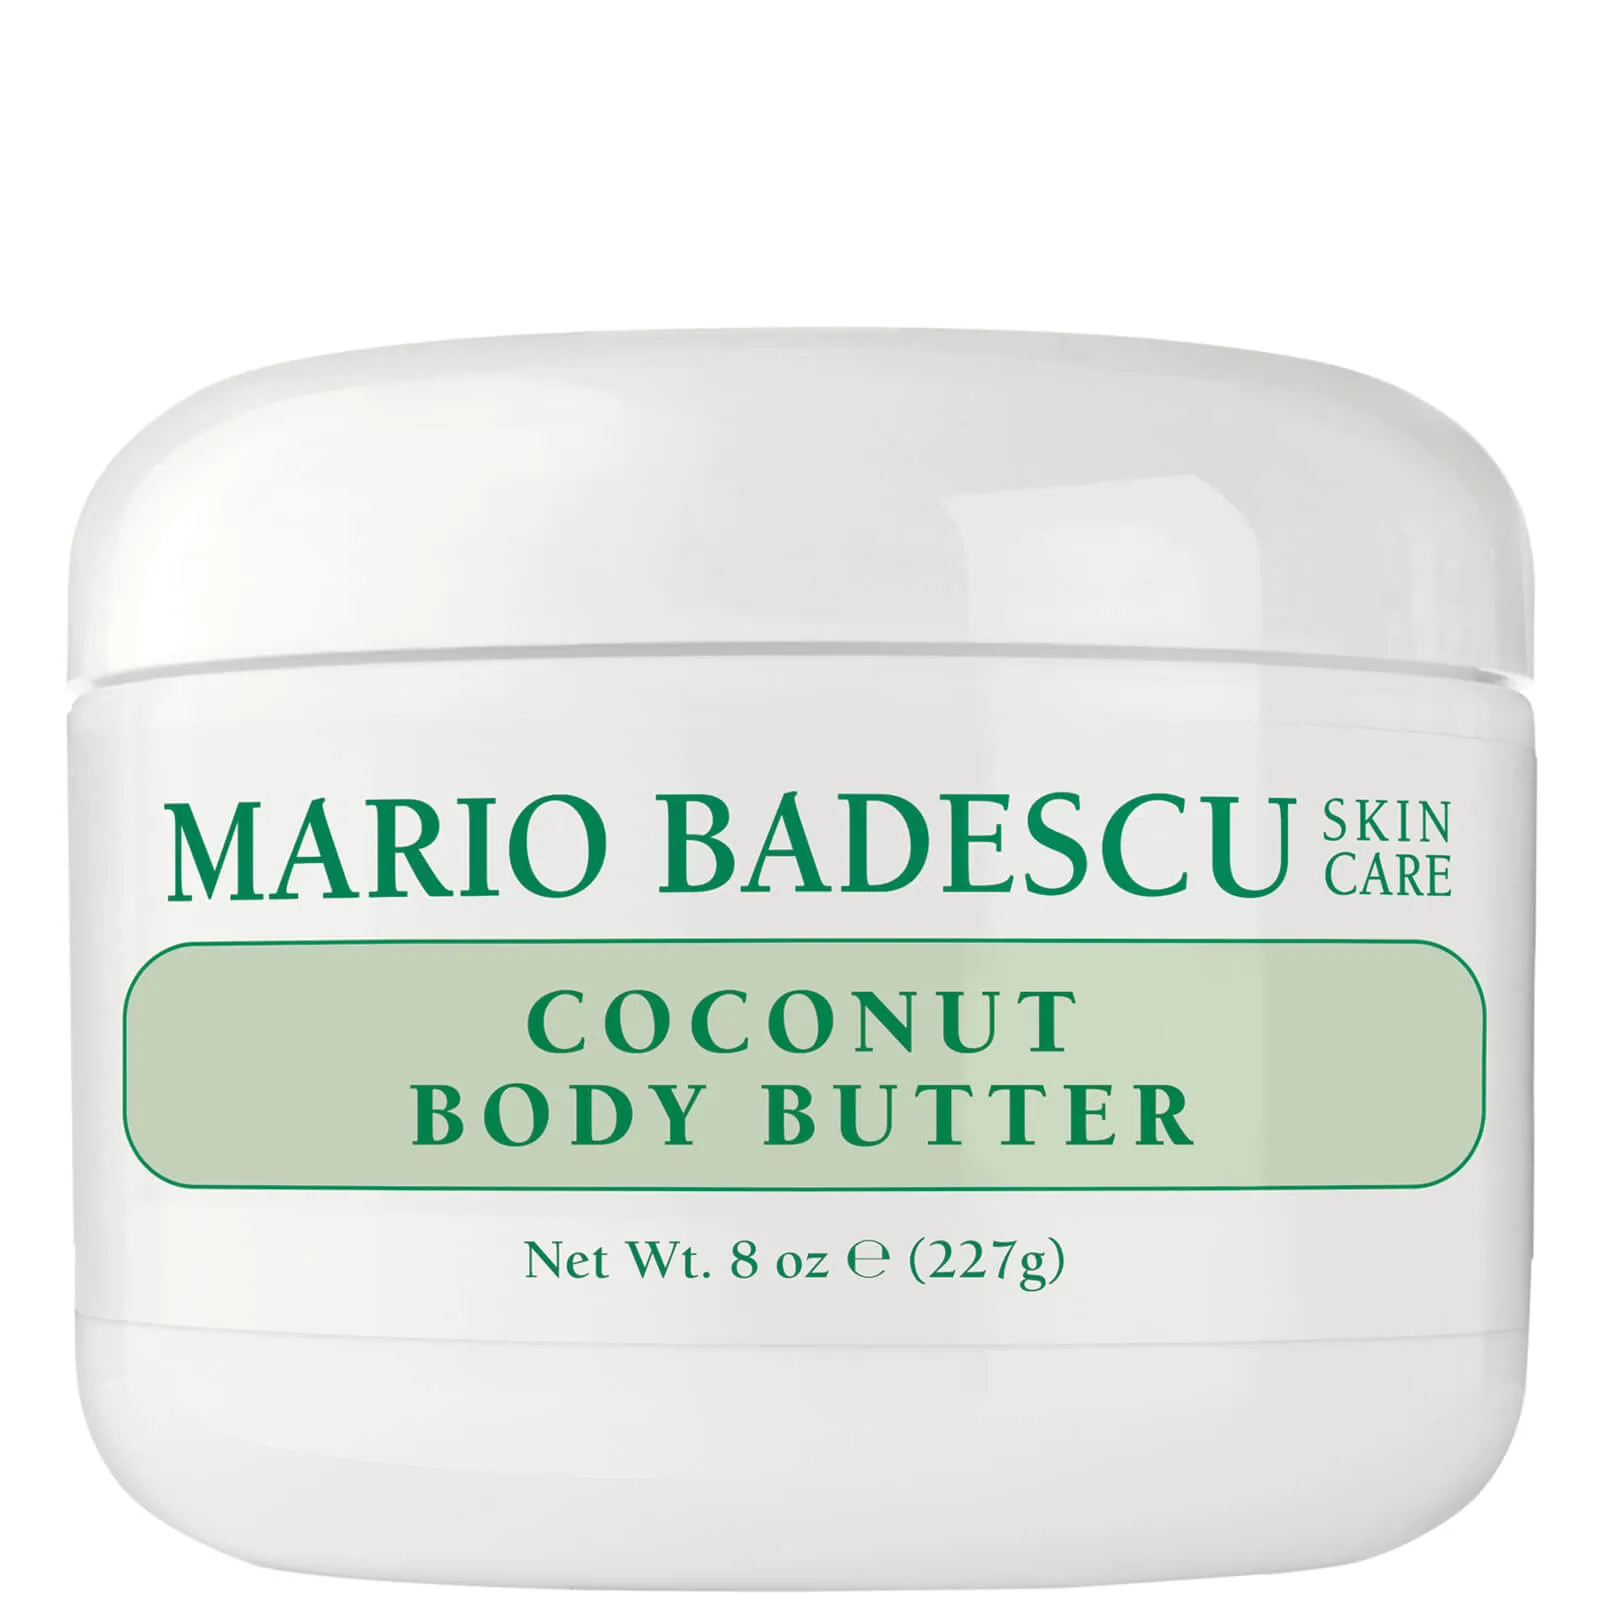  Coconut Body Butter 113g